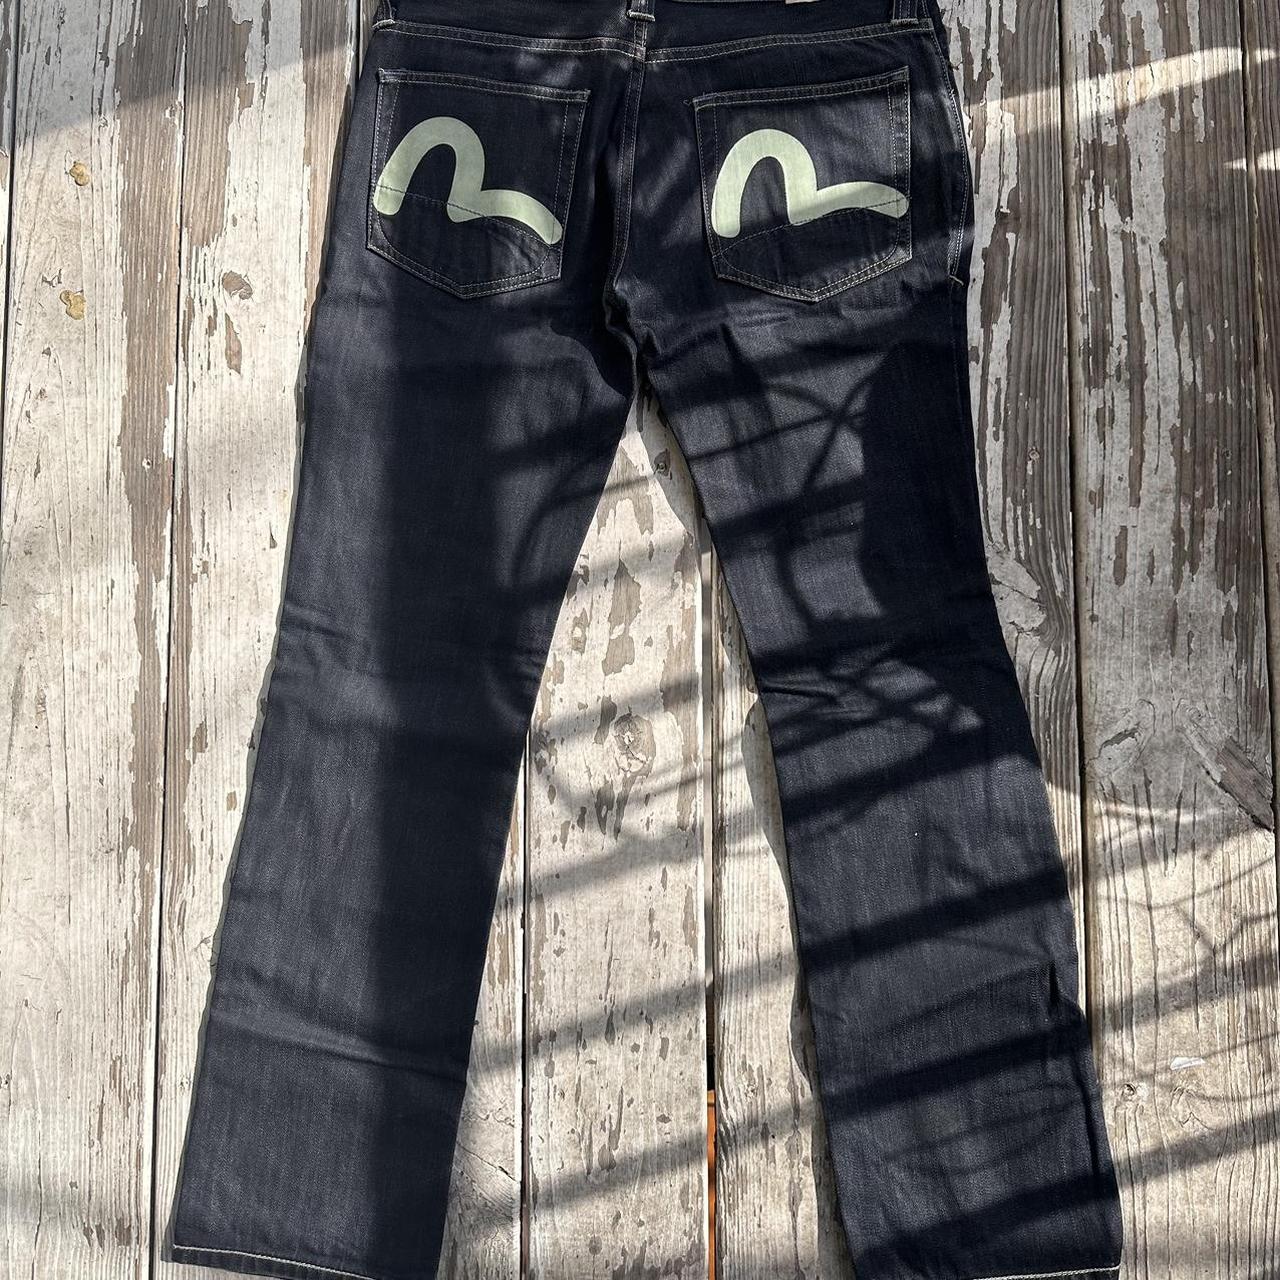 Buy Boys Stretchable Black Jeans Pants Men Jeans Pants Black Color Jeans  Pants at Amazon.in